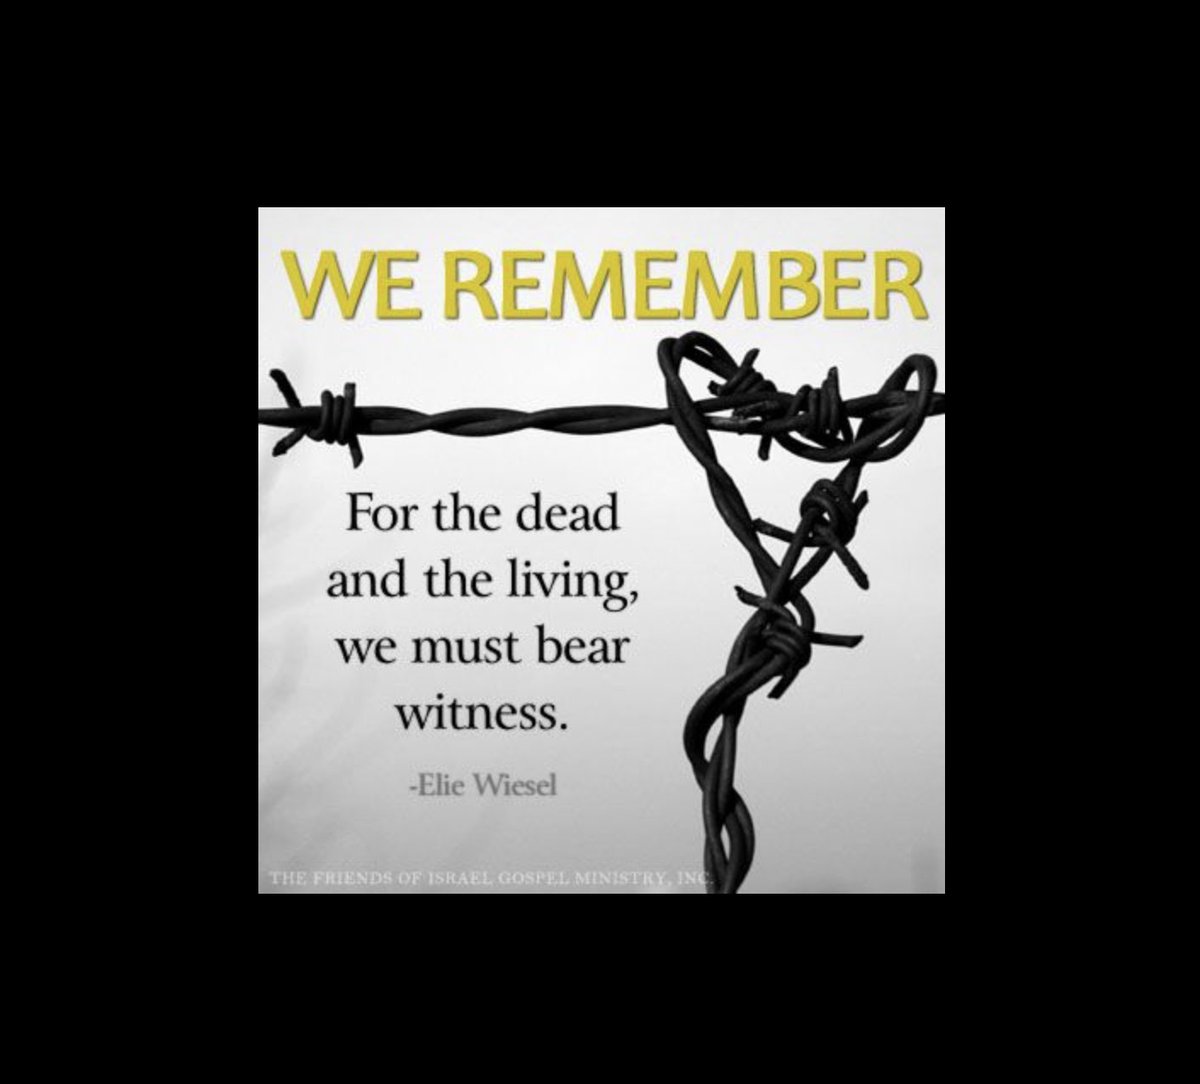 @tweetMalena #HolocaustRemembrance23 #NeverAgain #NeverForget #UnitedAgainstHate